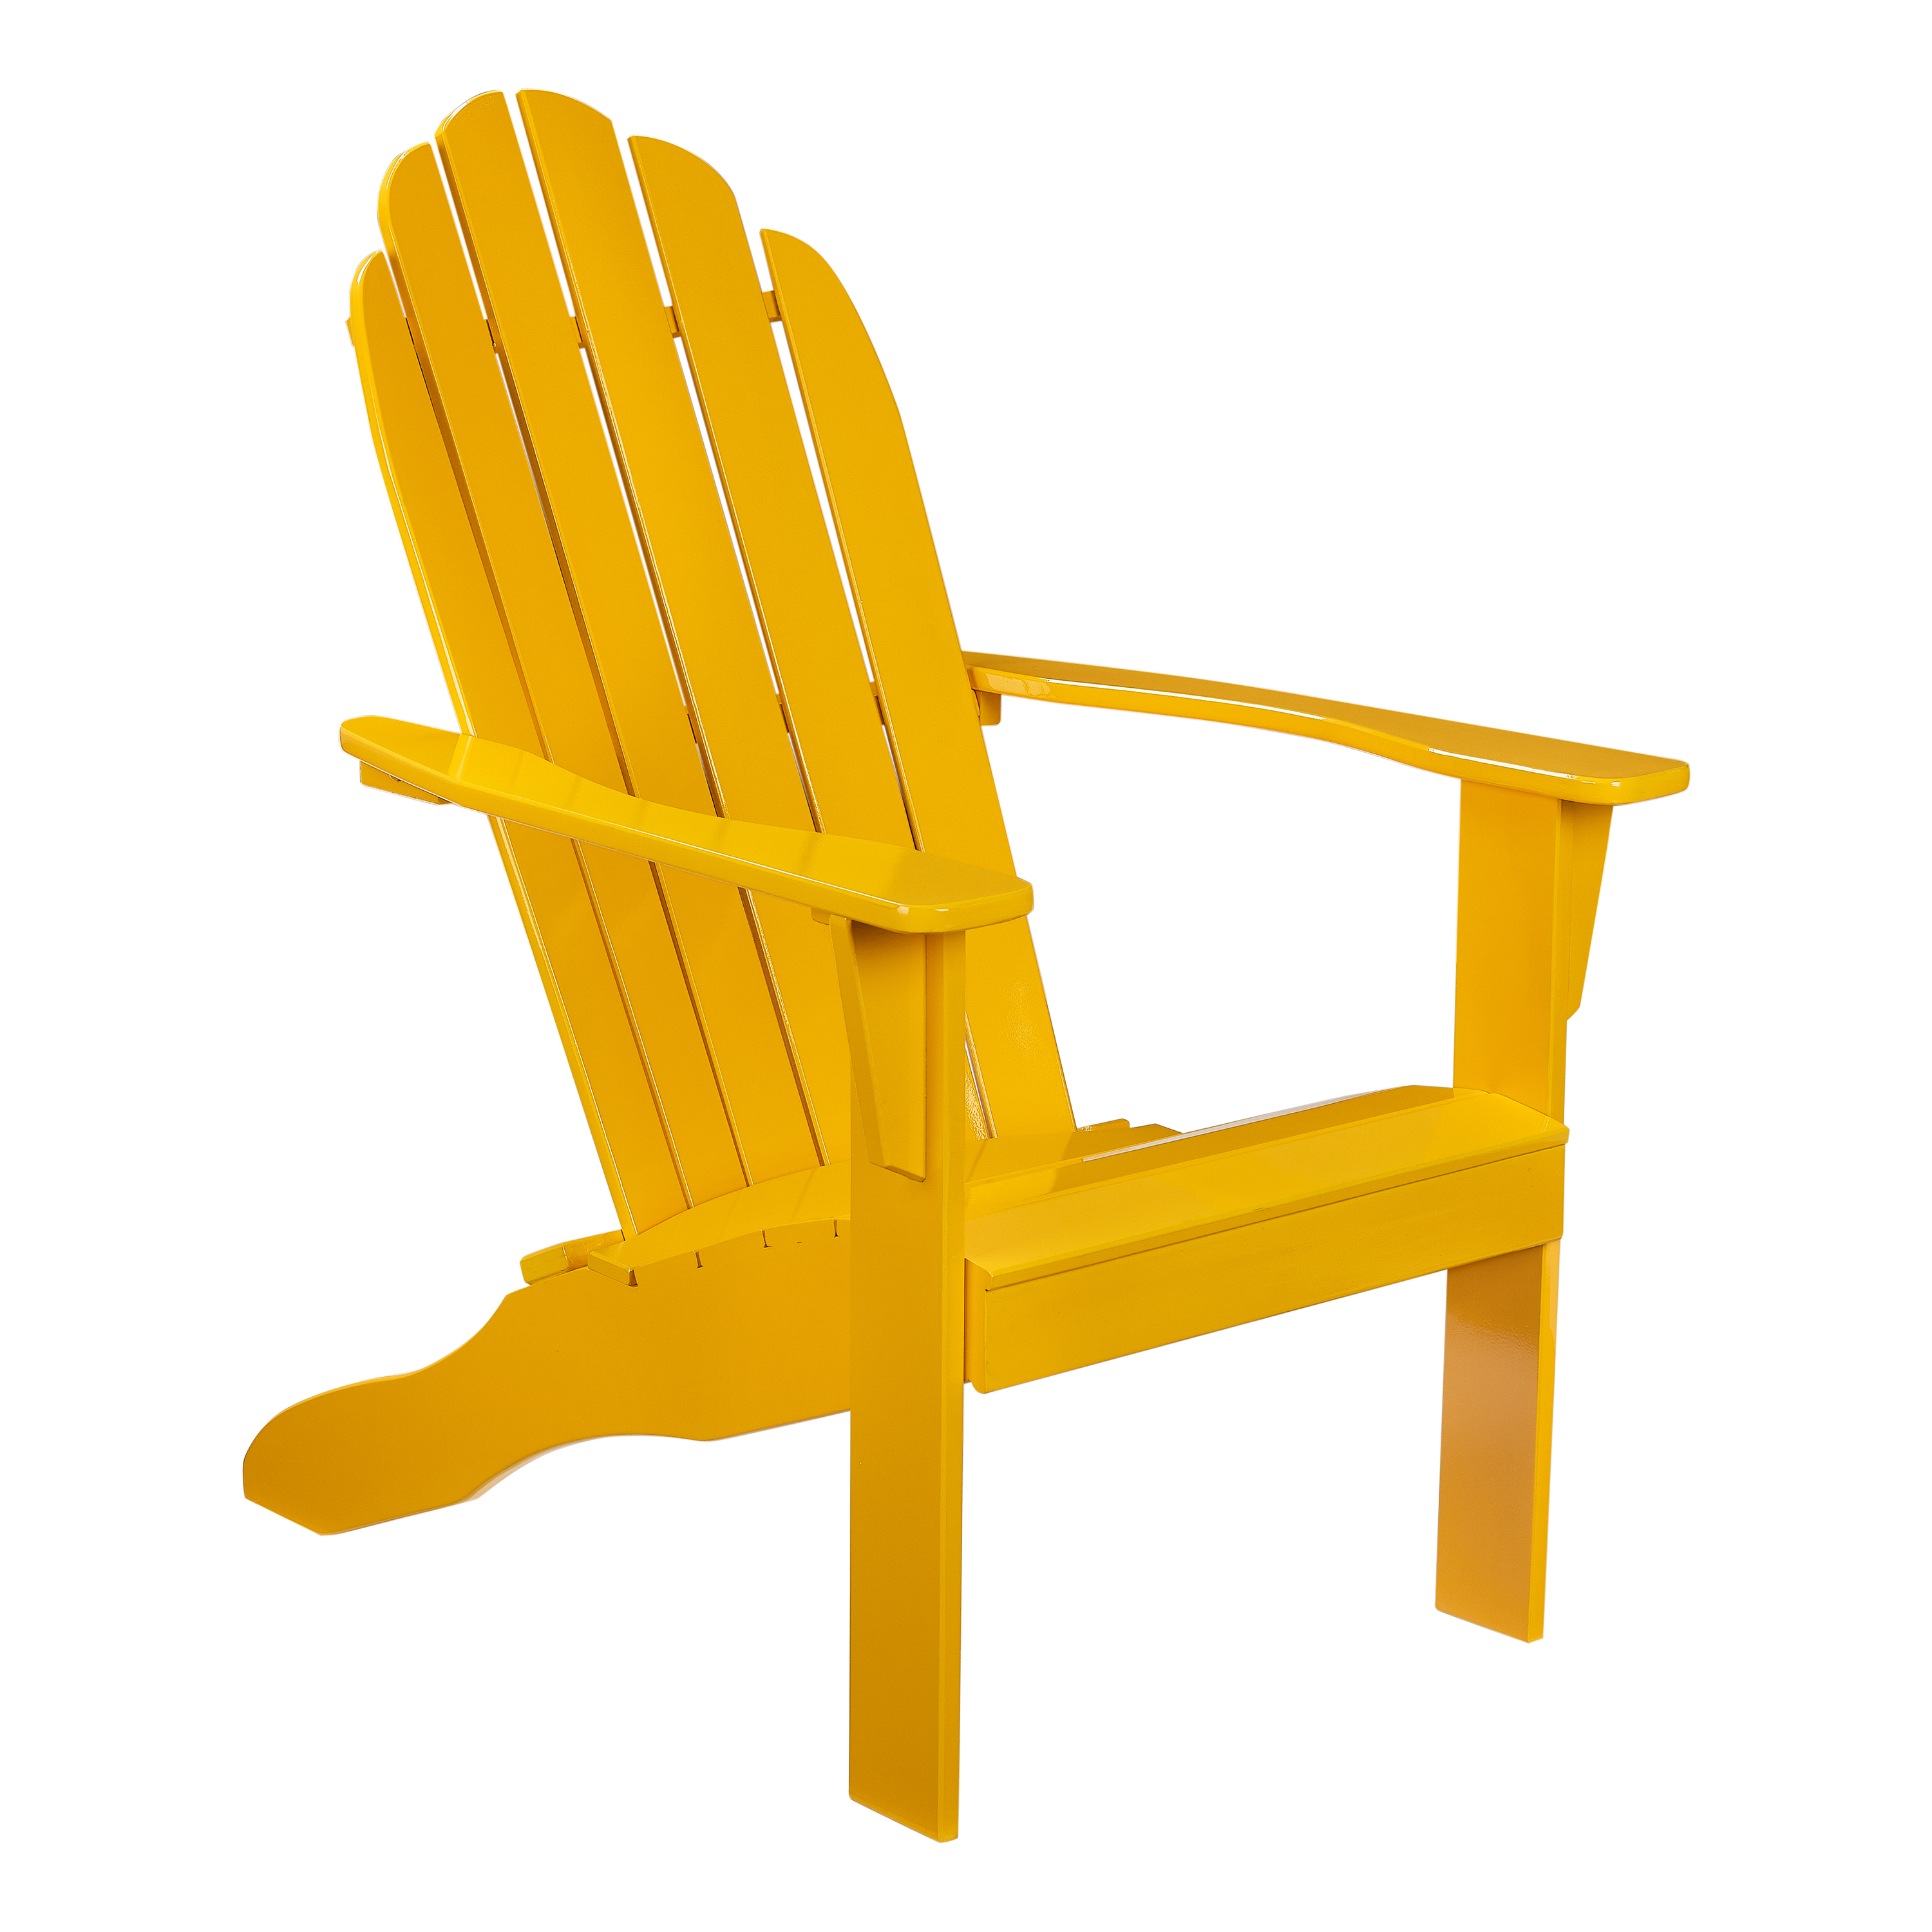 Mainstays Hardwood Adirondack Chair - Yellow - image 1 of 8